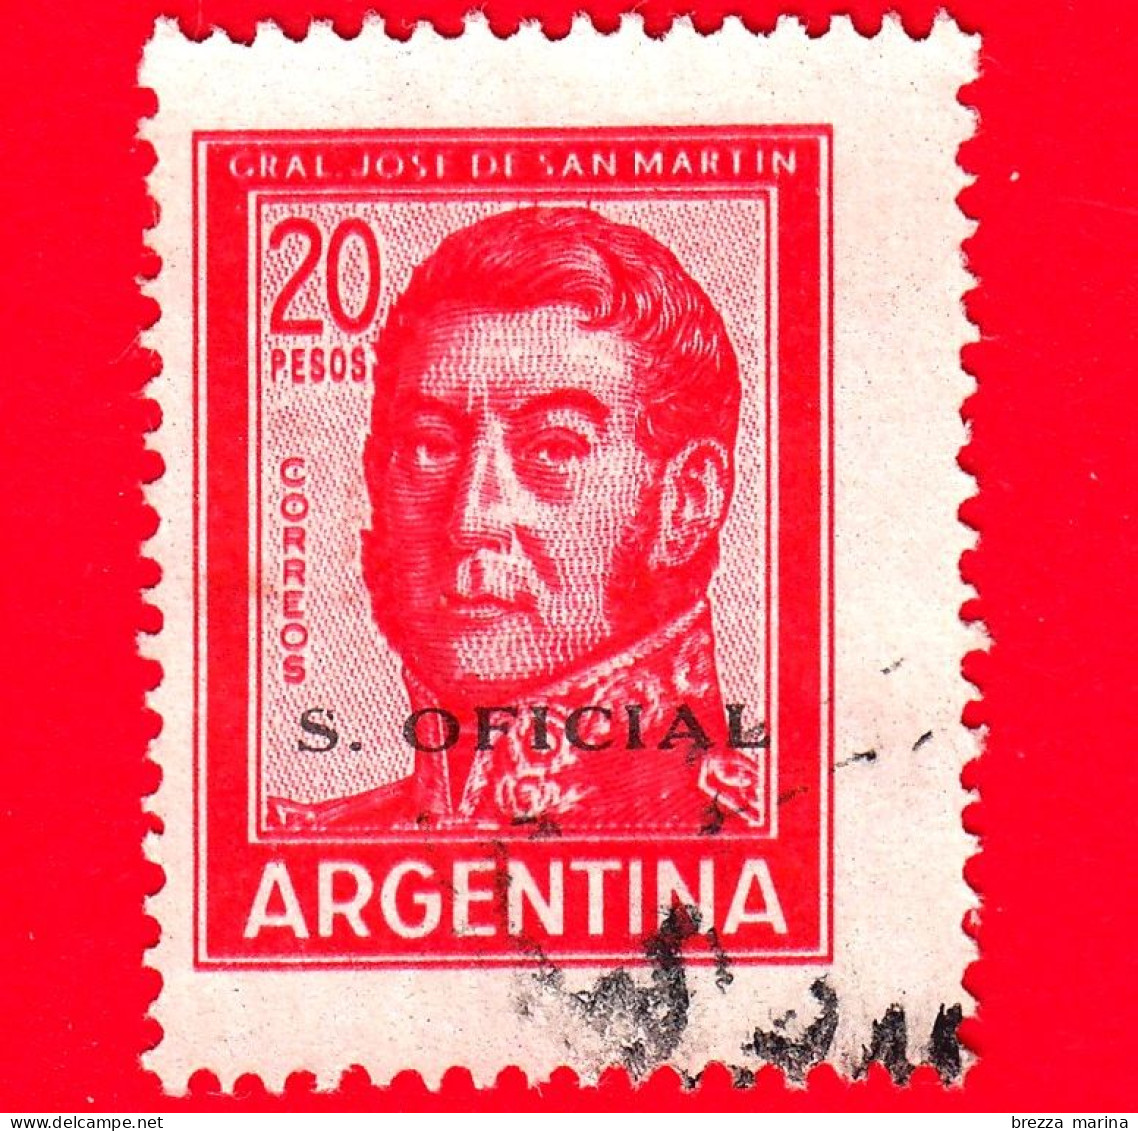 ARGENTINA - Usato -  1969 - General José Francisco De San Martin (1778-1850) - 20 - Sovrastampato S. OFICIAL - Usados